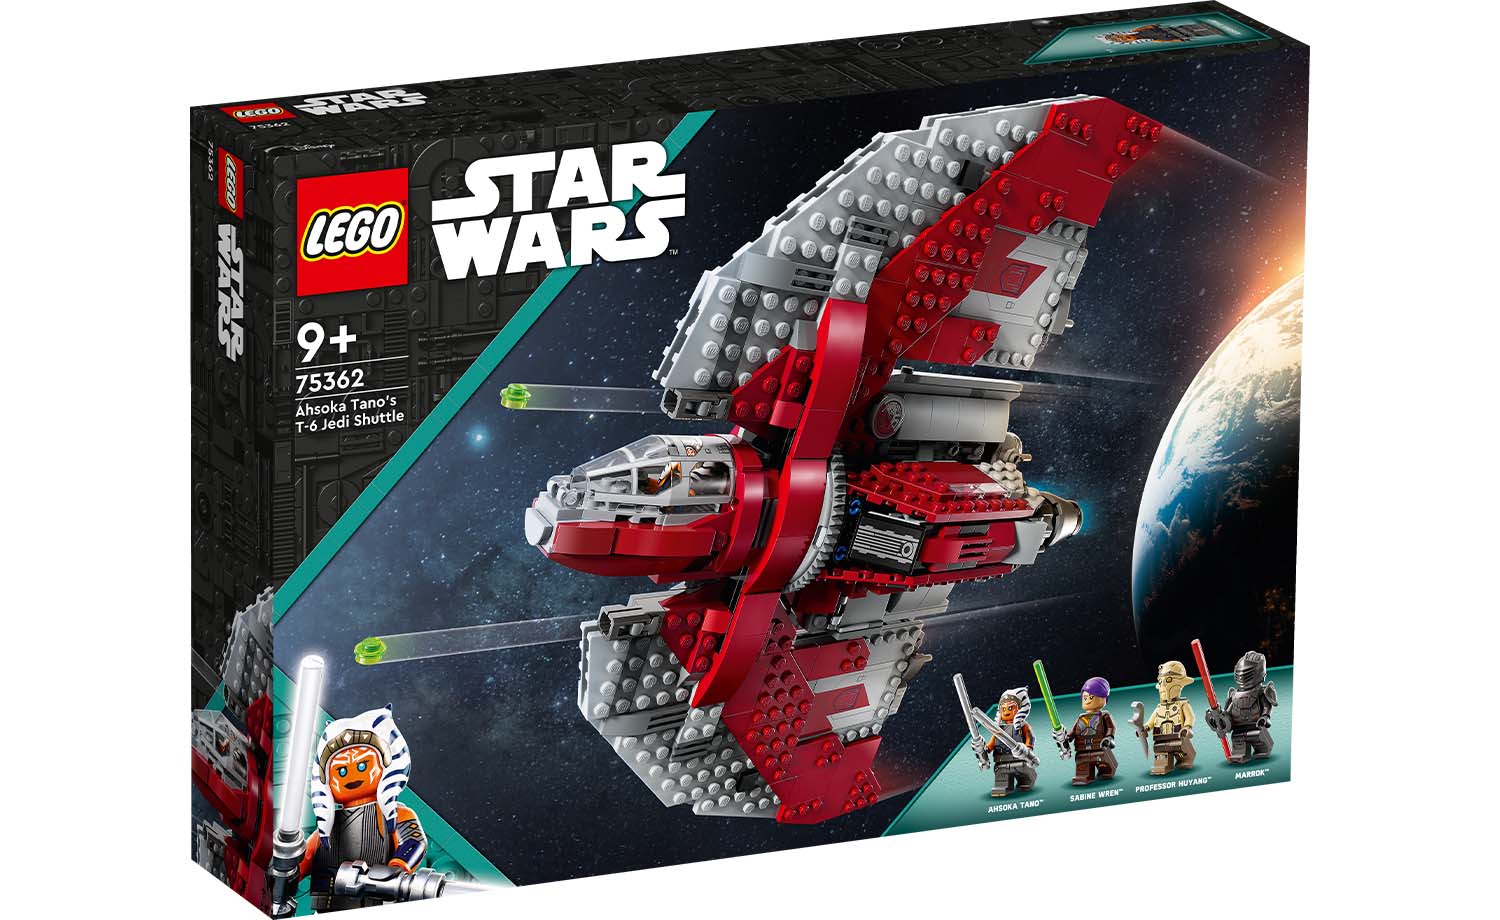 LEGO® Star Wars™ Yoda's Jedi Starfighter™ 75360 Building Toy Set (253  Pieces)